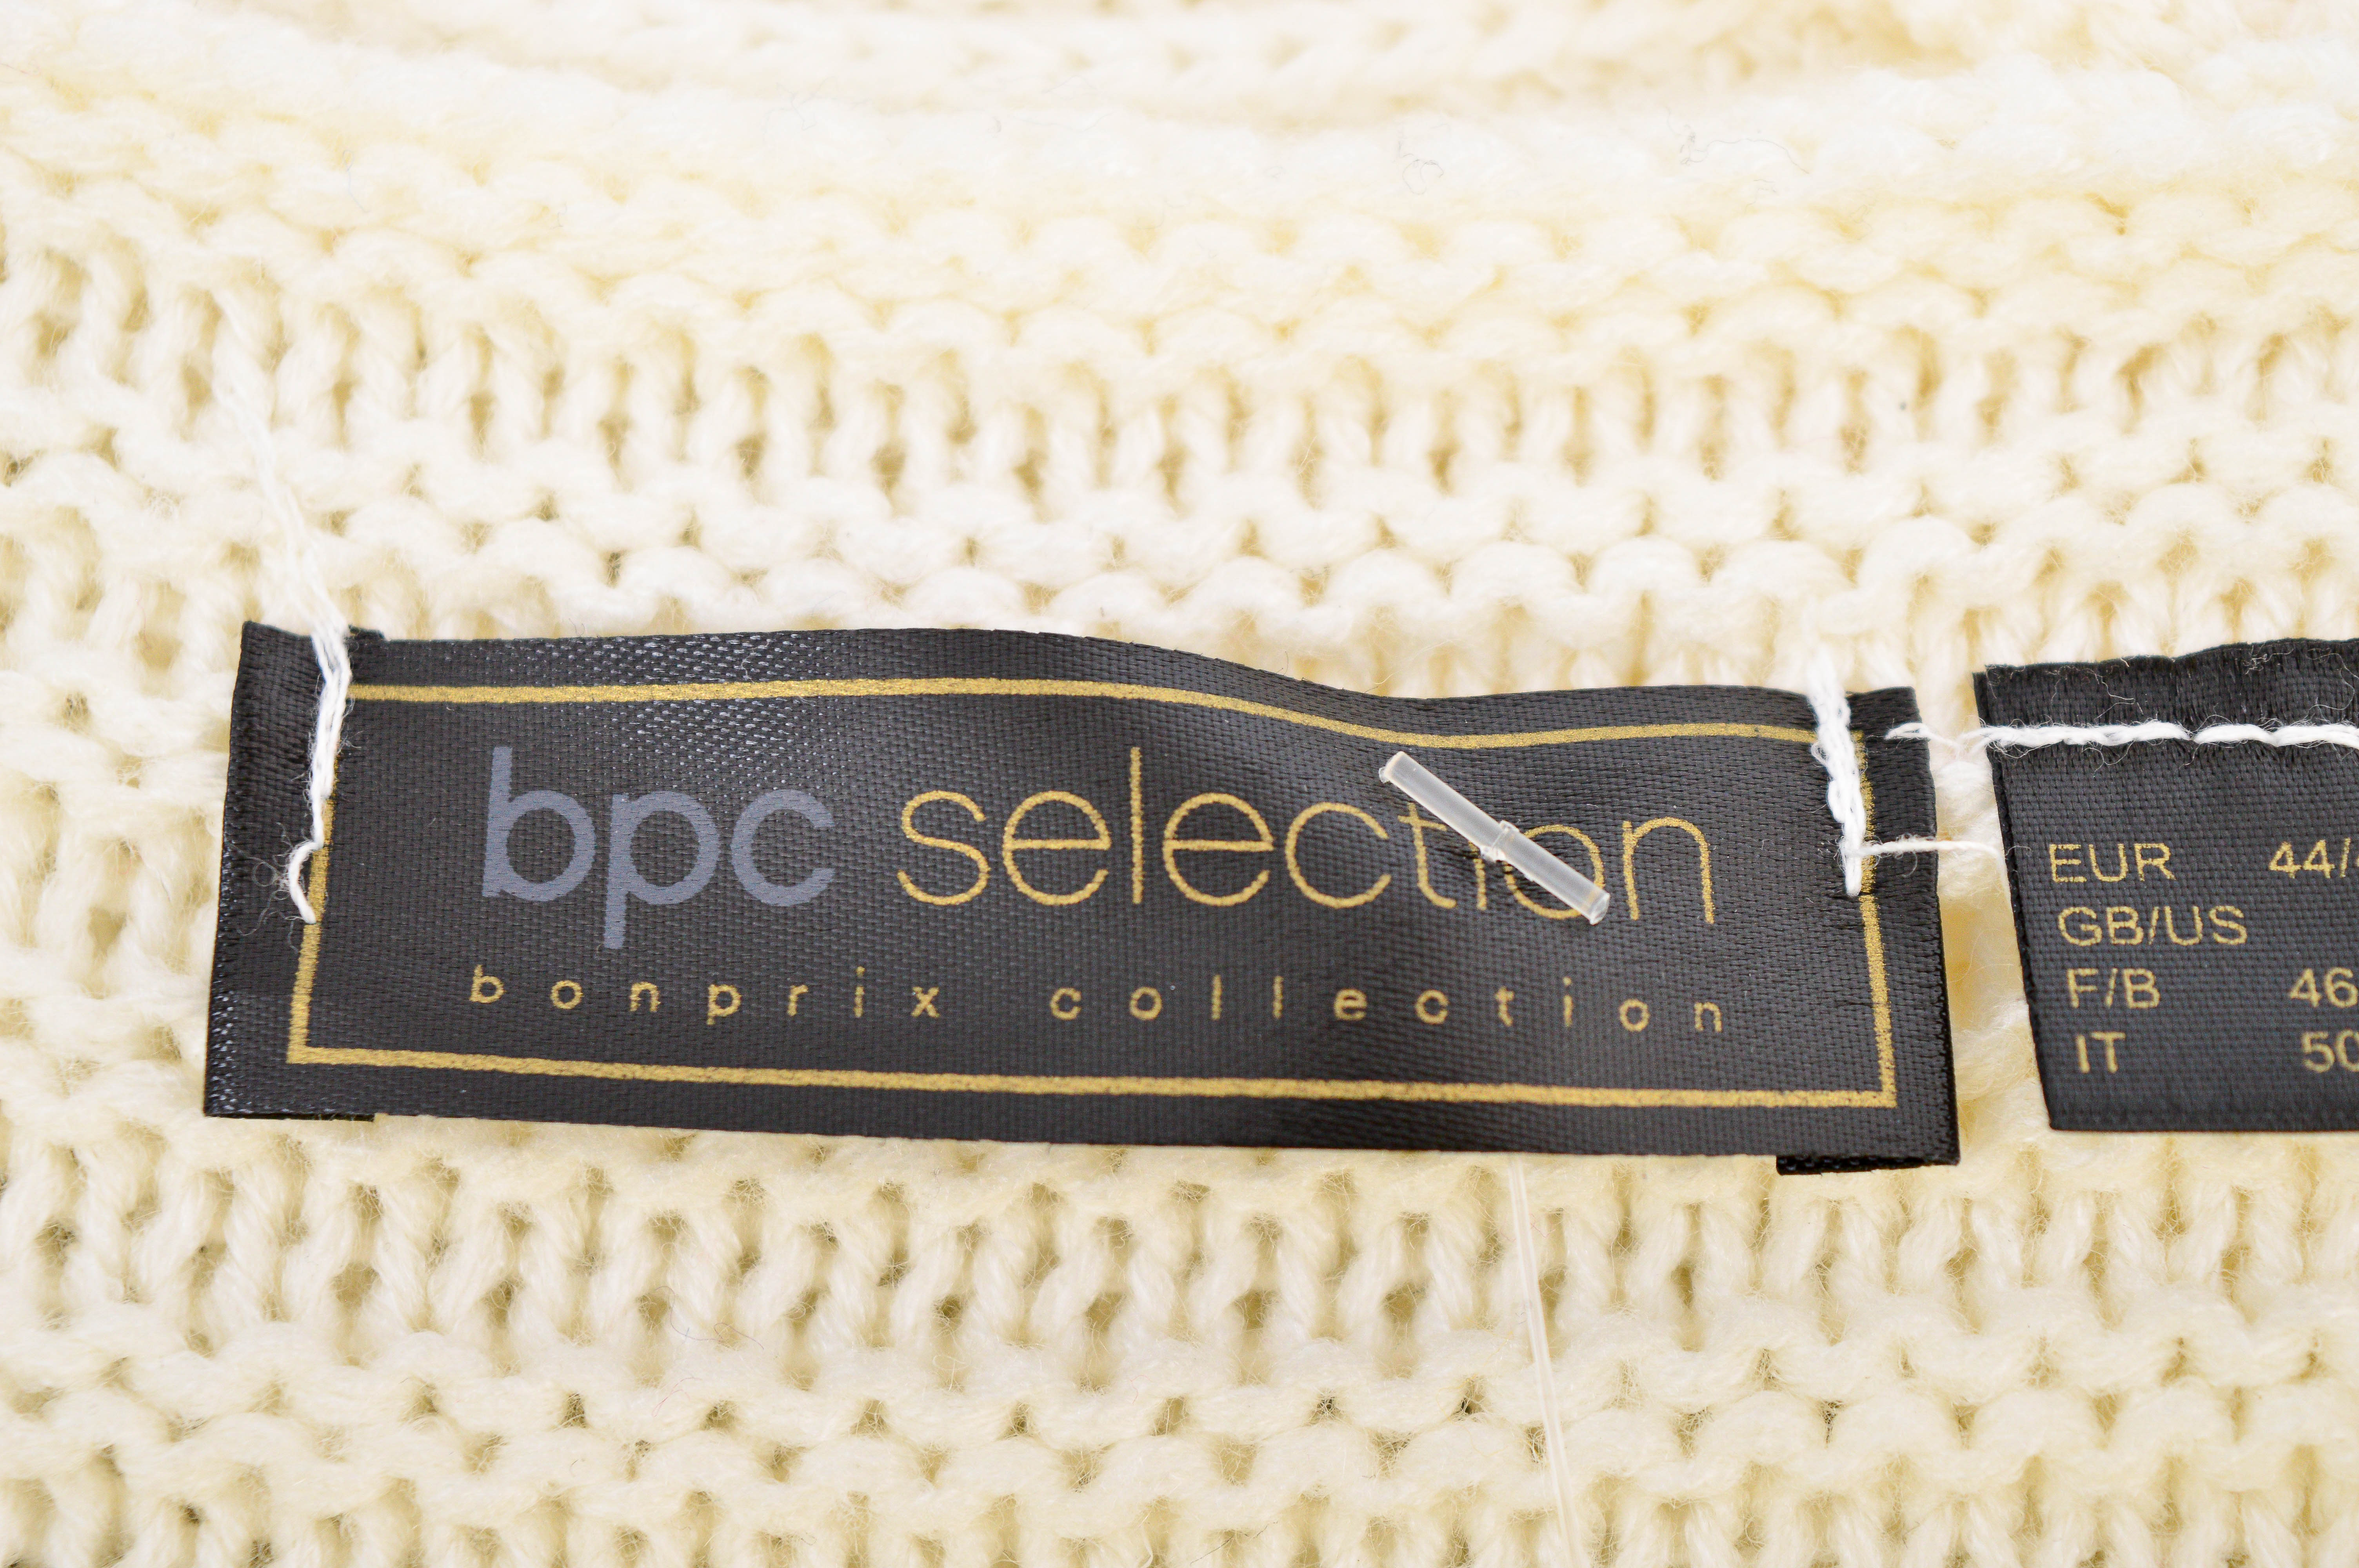 Women's cardigan - Bpc selection bonprix collection - 2